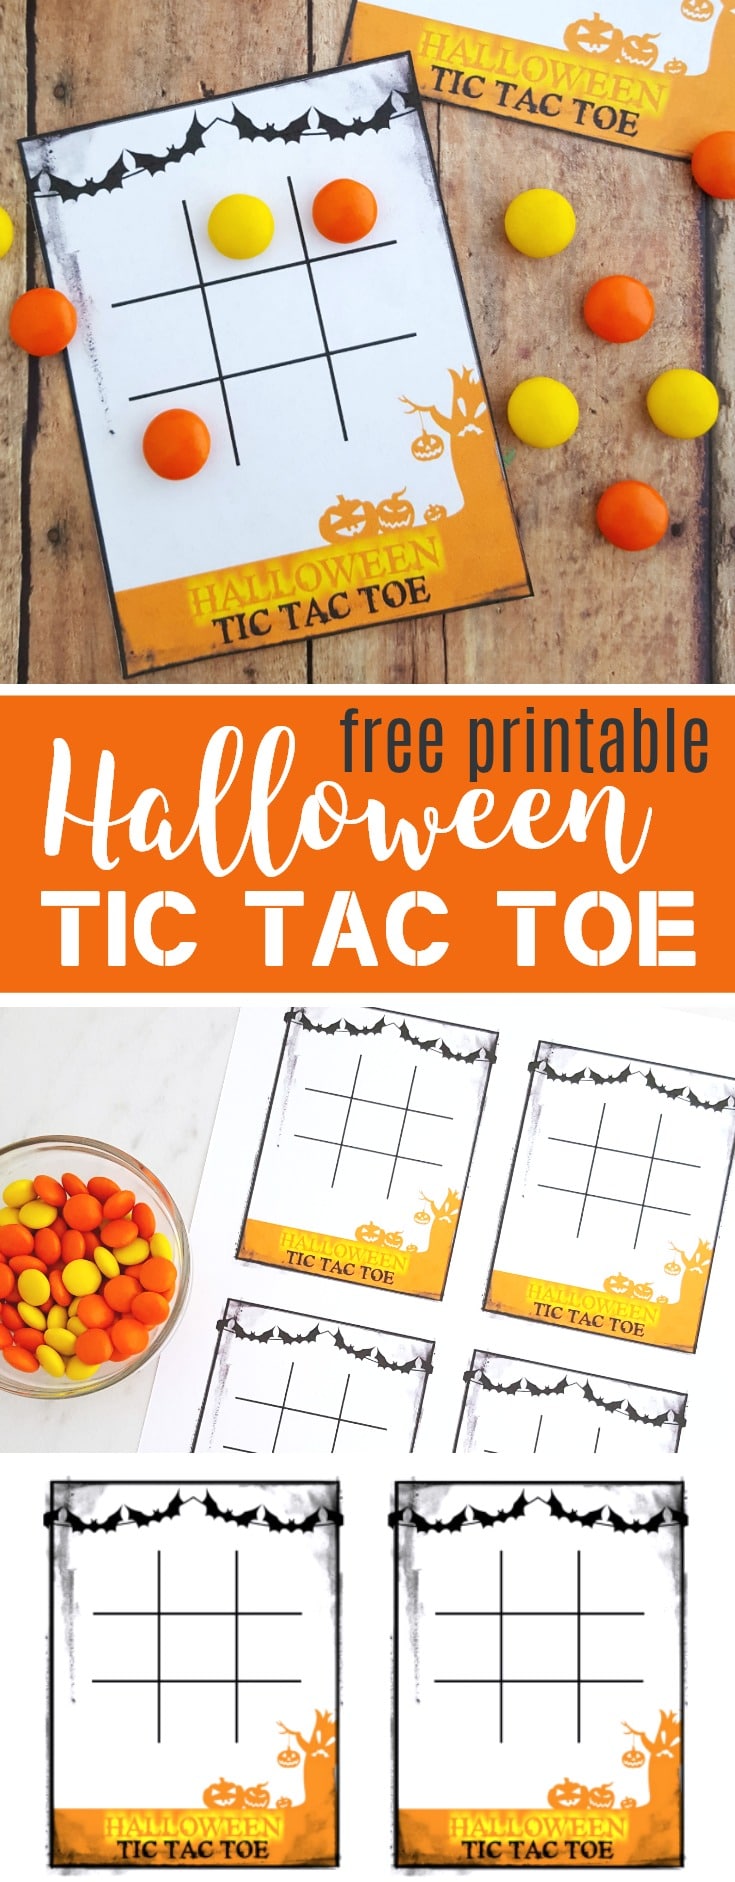 free-halloween-tic-tac-toe-printable-game-cards